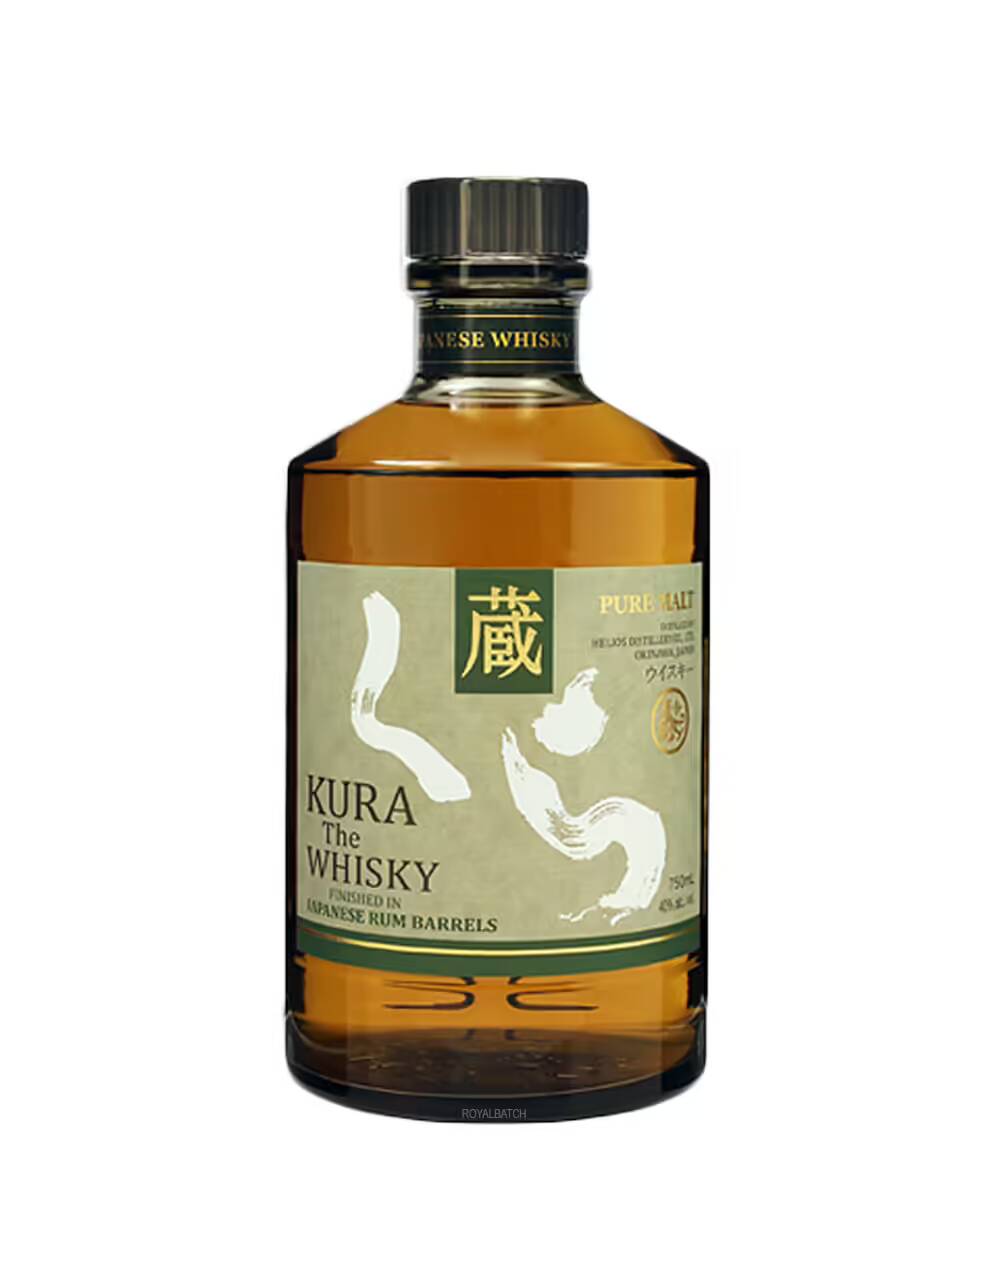 Kura The Whisky Pure Malt Finished in Japanese Rum Barrels